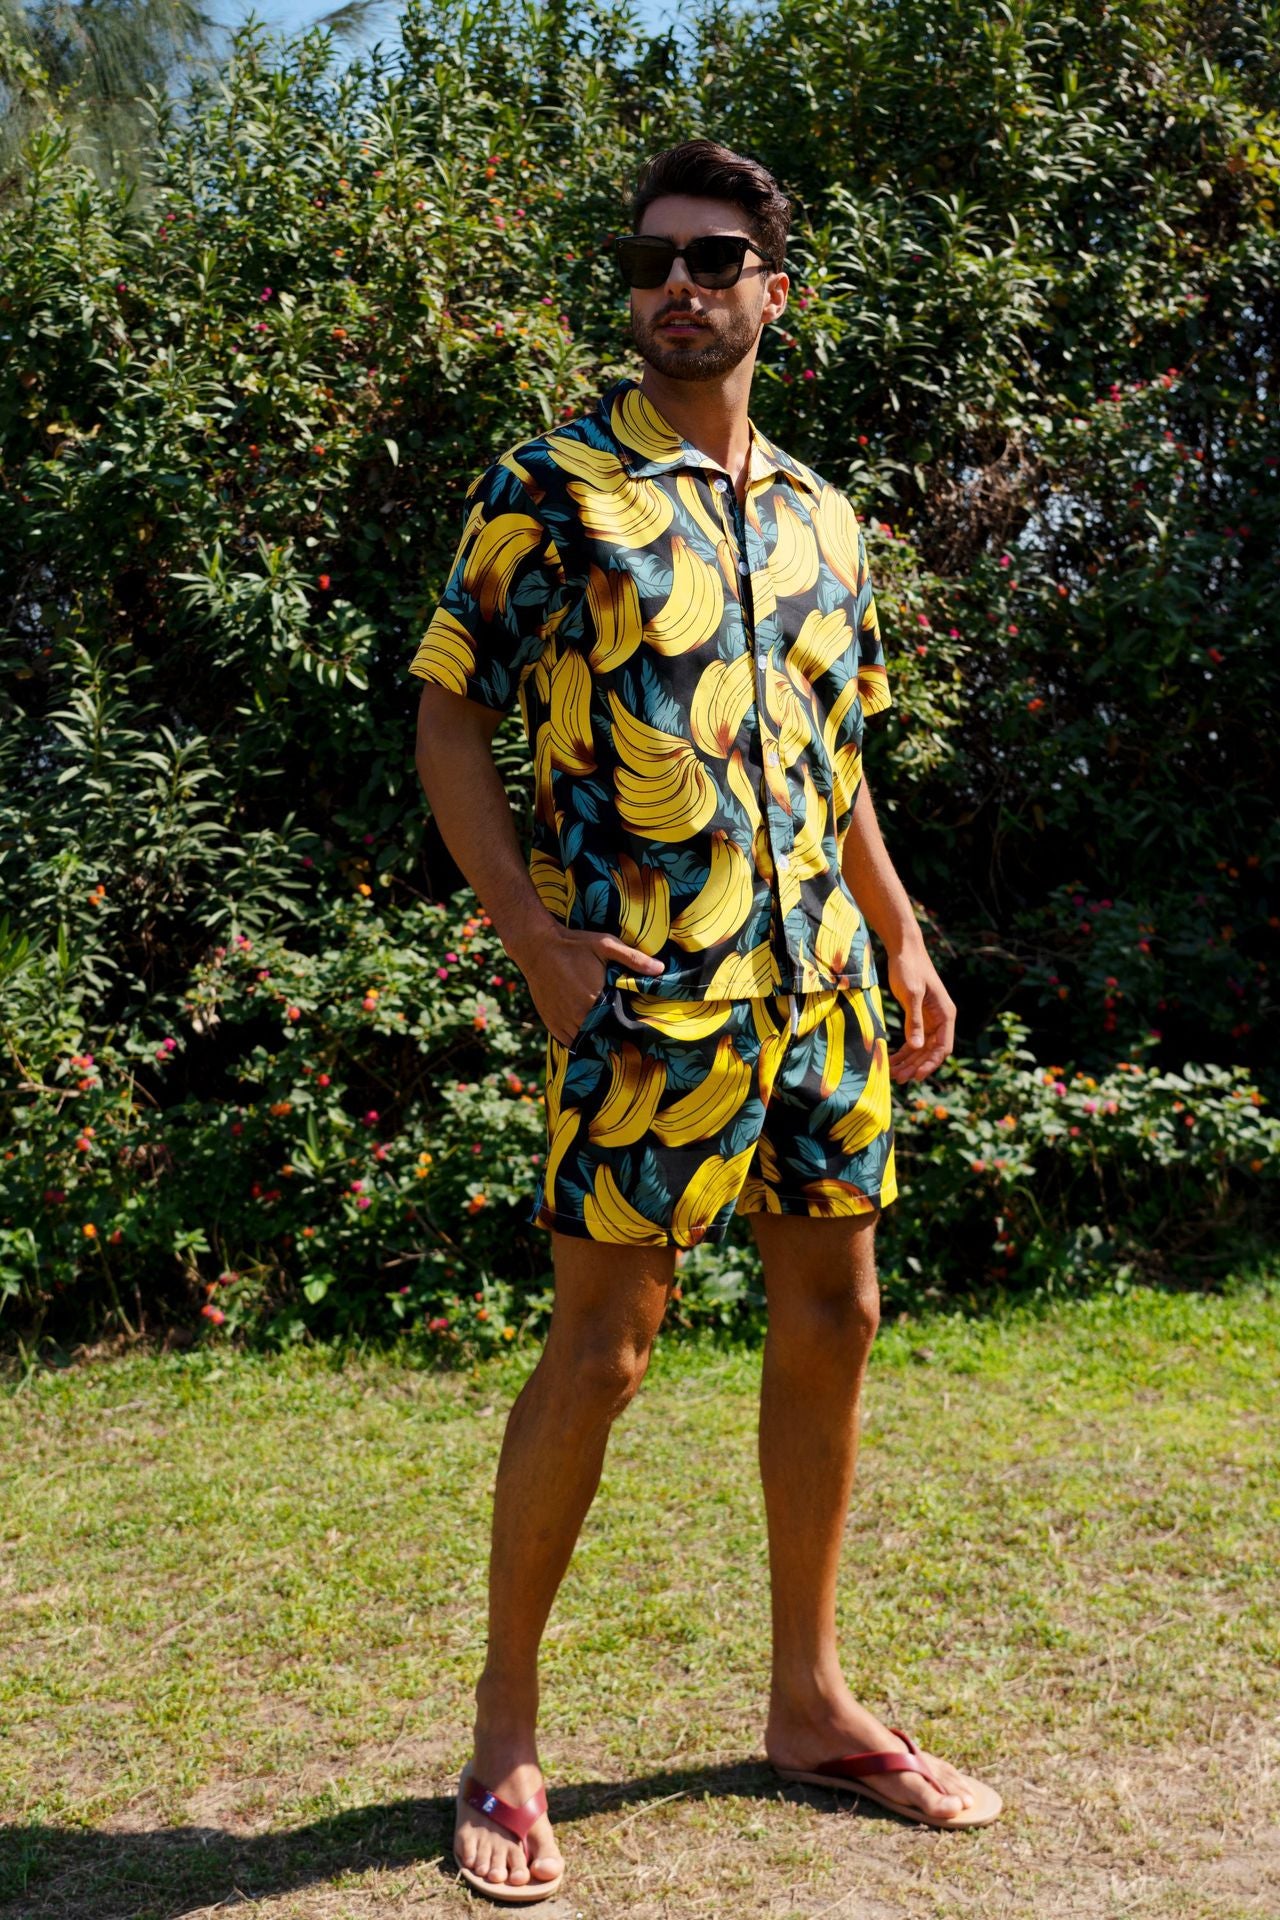 Men's Shirt Short 2-Piece Hawaiian Loose Tropical Print Casual Sets | ST05